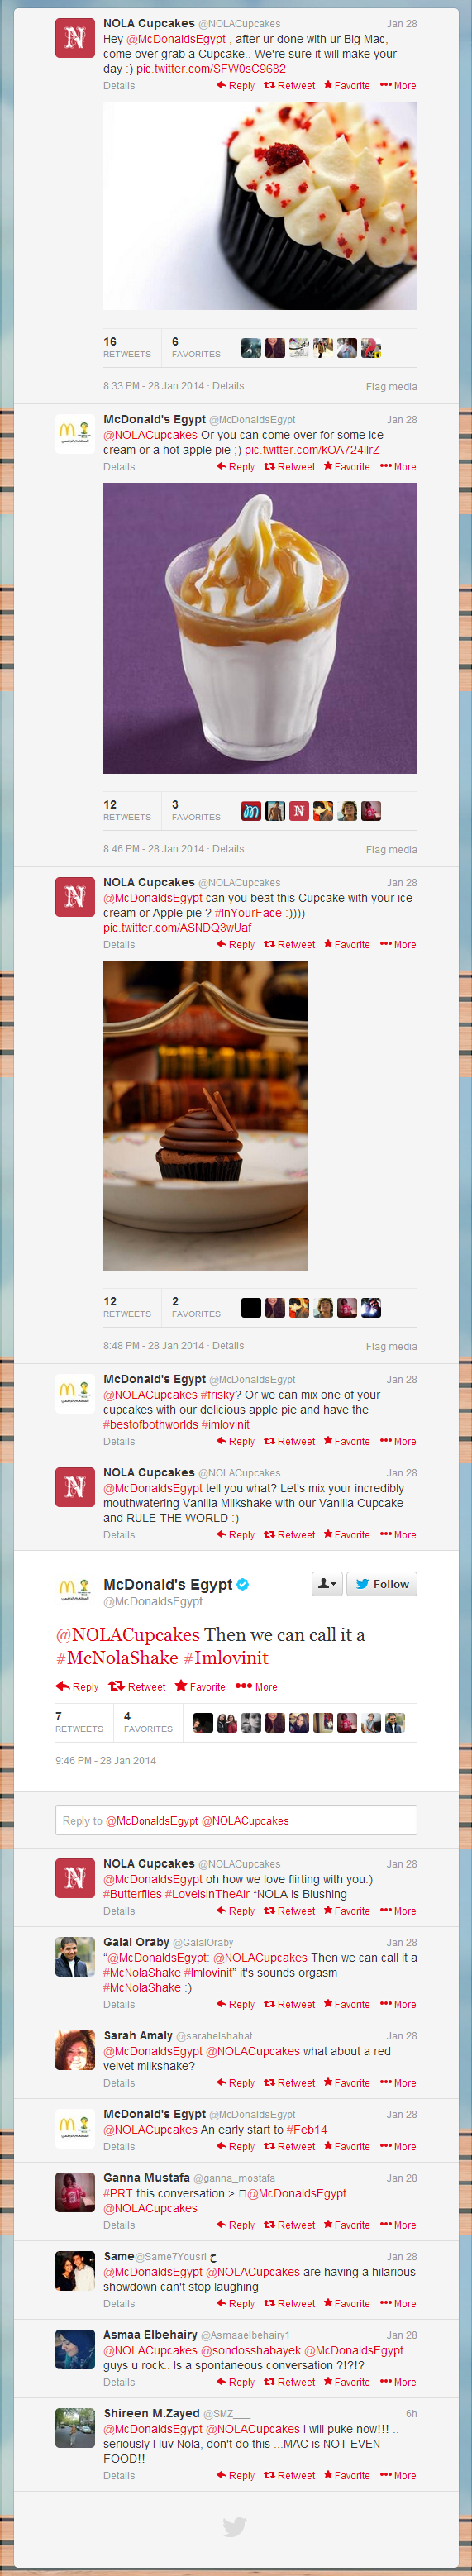 NOLA Cupcakes and McDonalds Egypt Co-Creates #McNolaShake on #Twitter